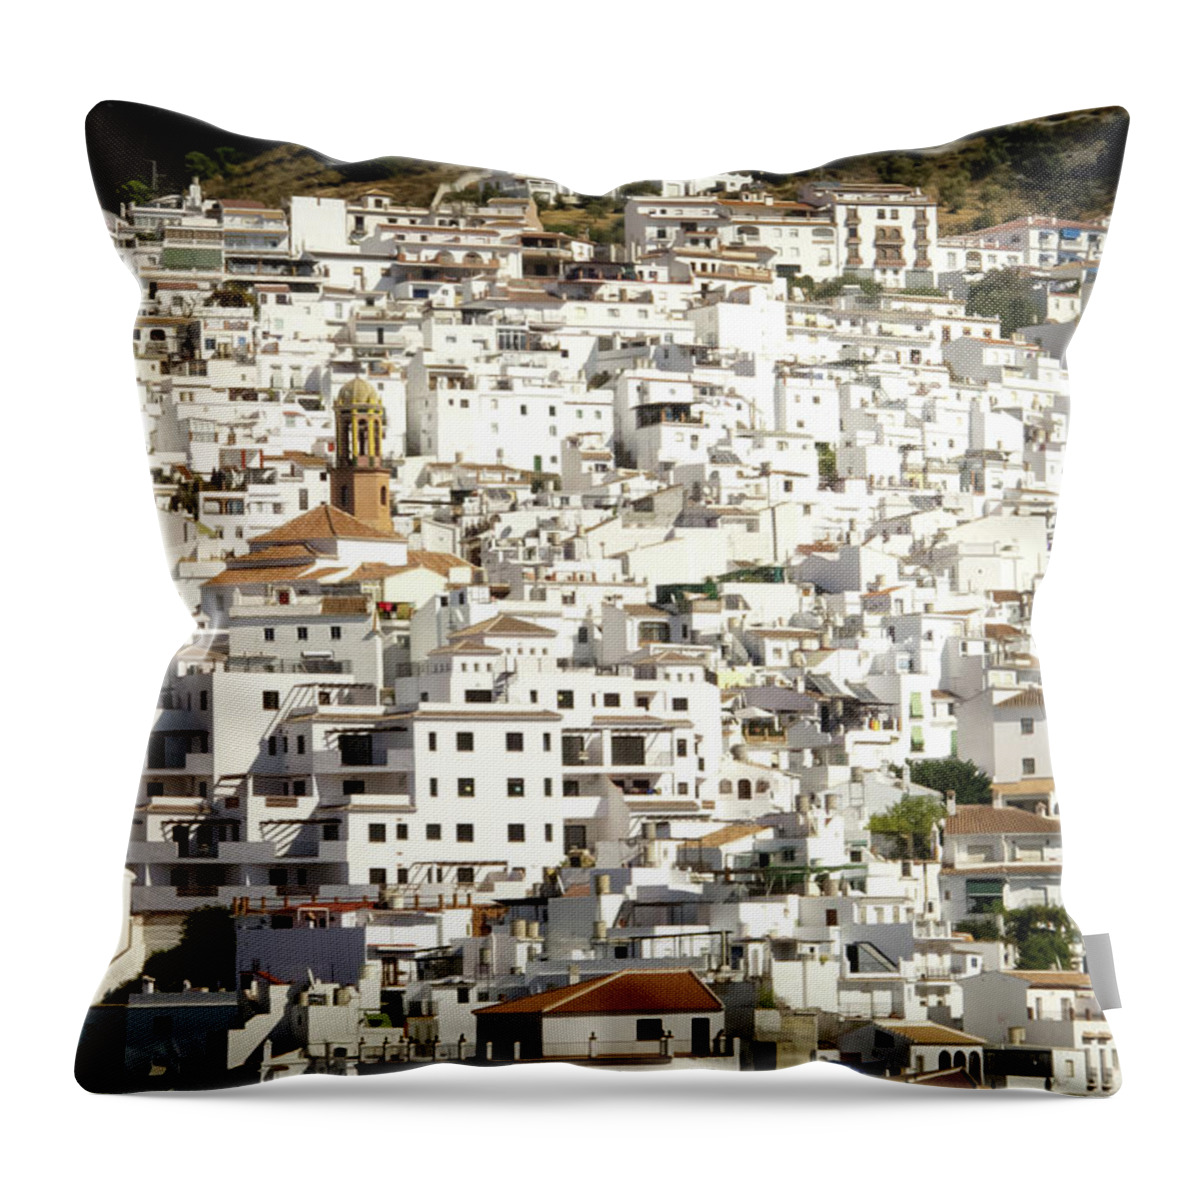 Spain Throw Pillow featuring the digital art White Village Competa Spain by Naomi Maya